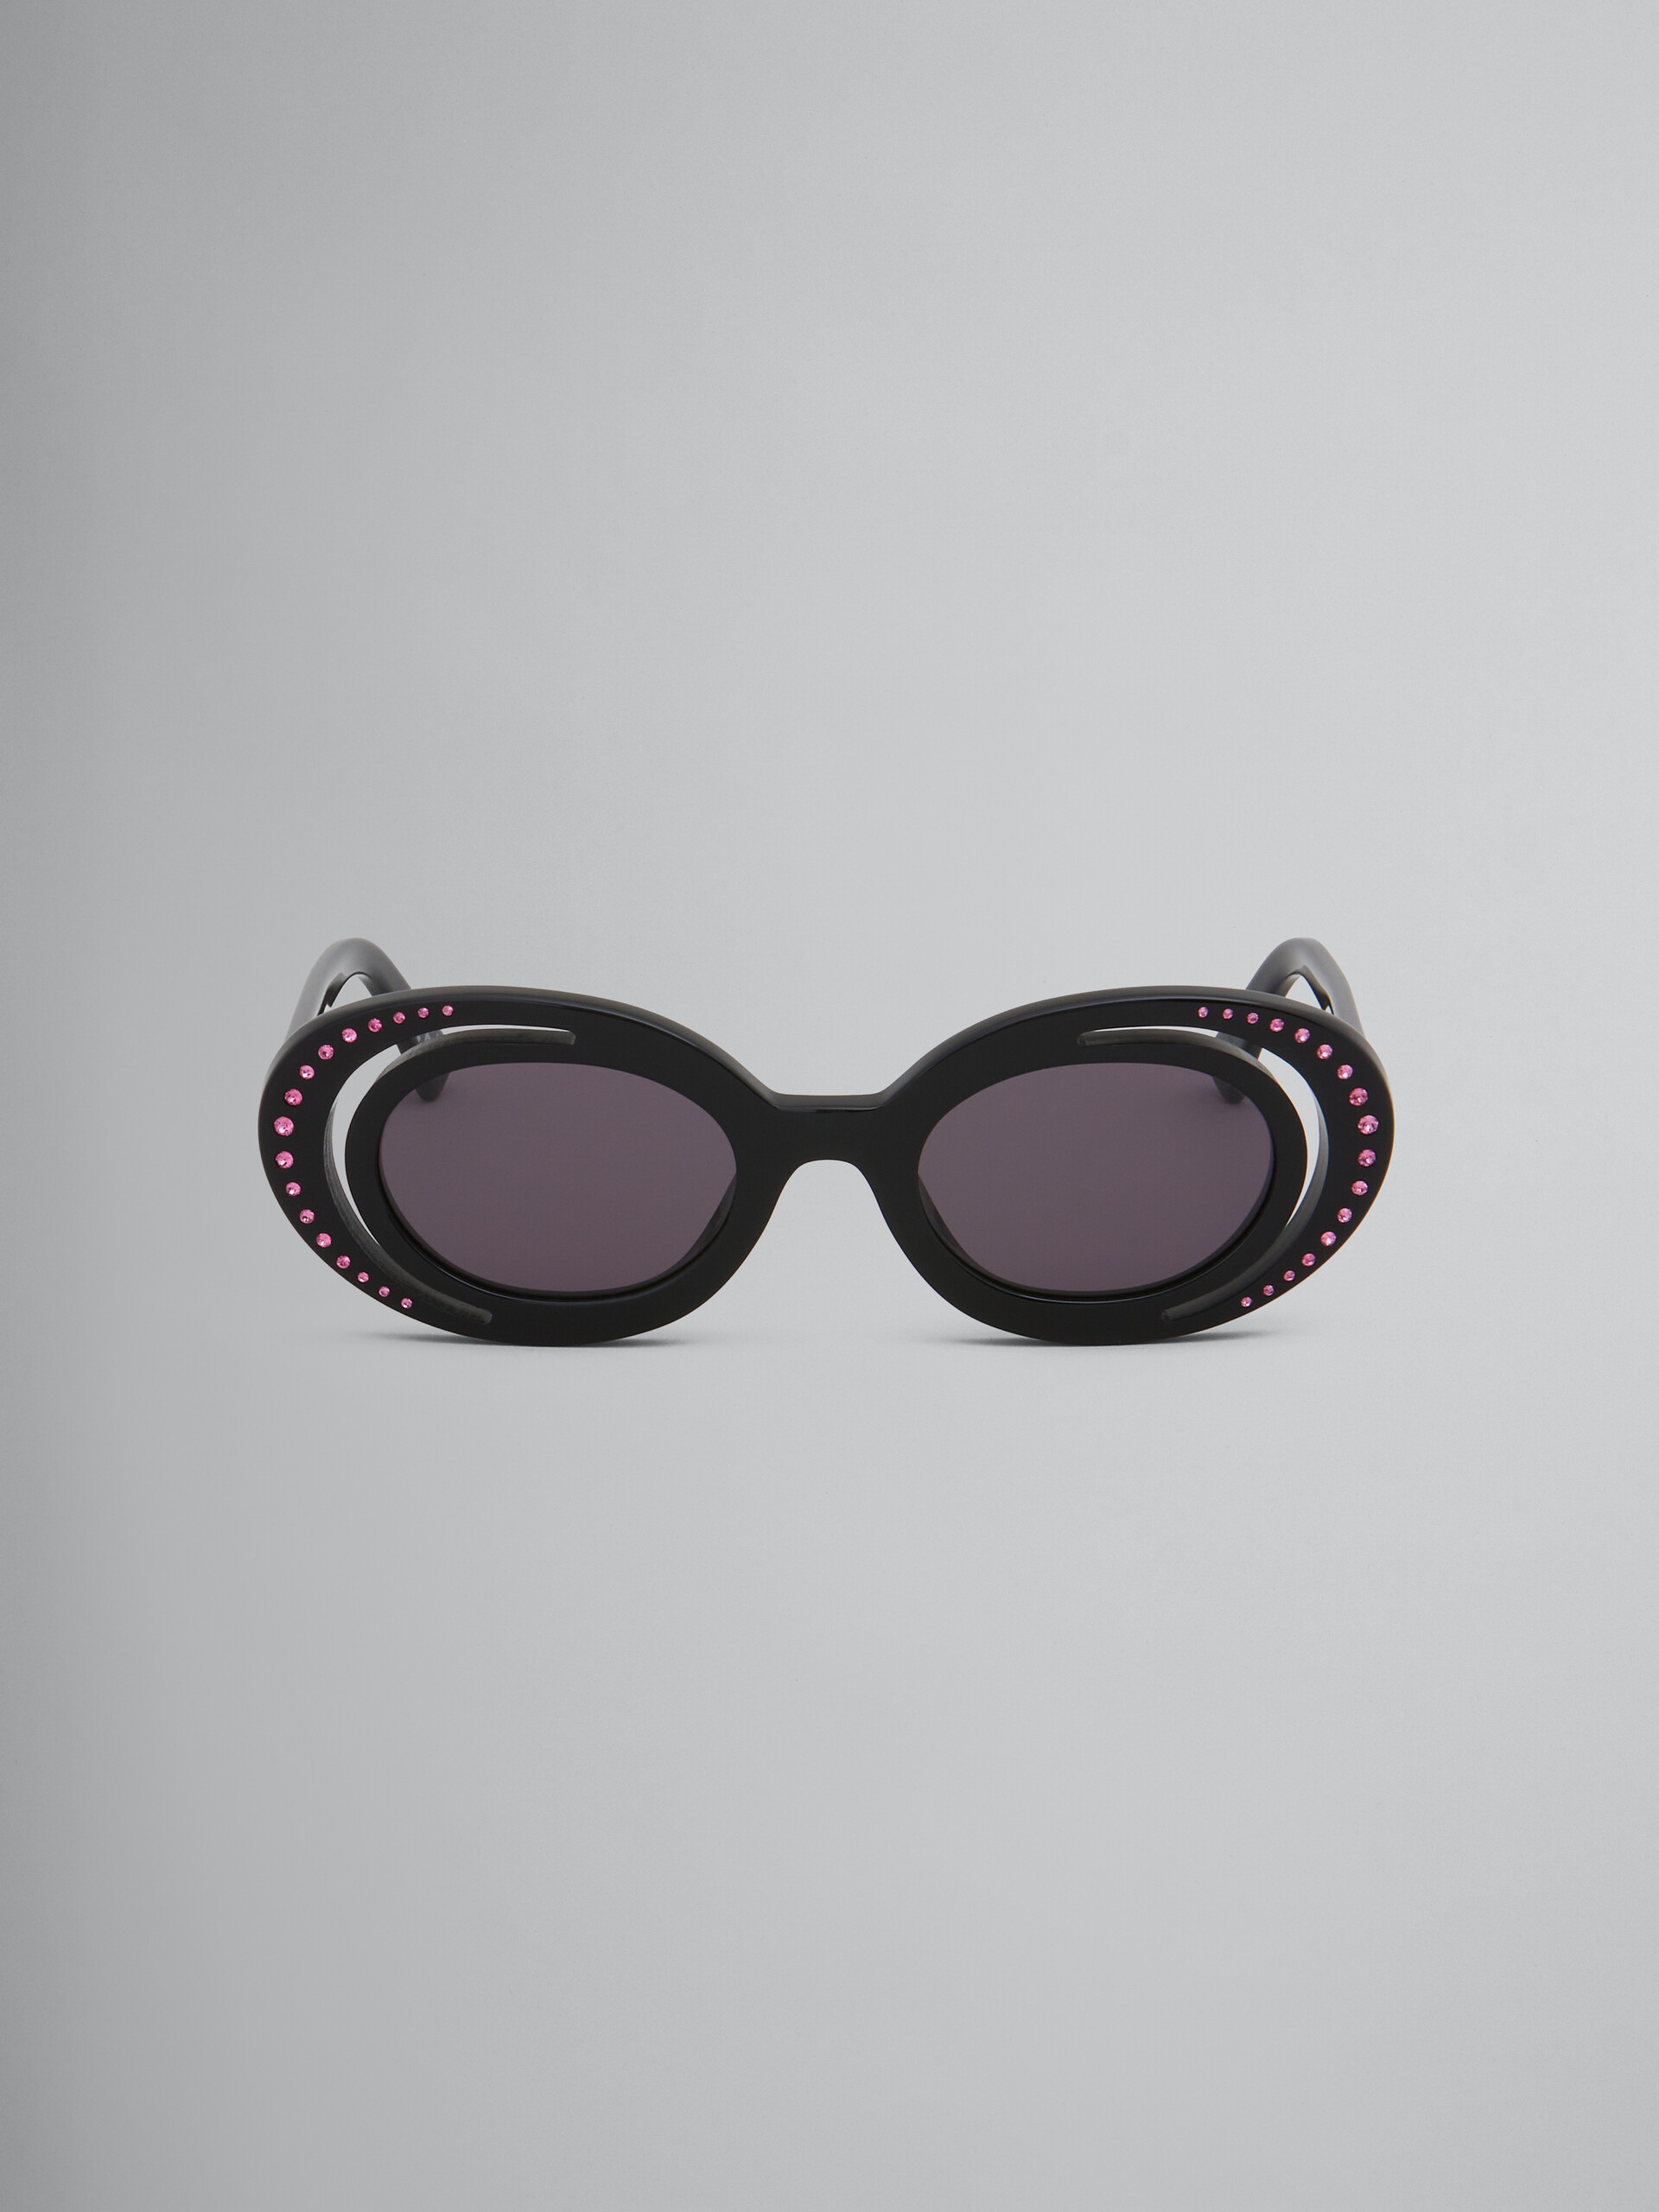 Zion Canyon black sunglasses - Optical - Image 1